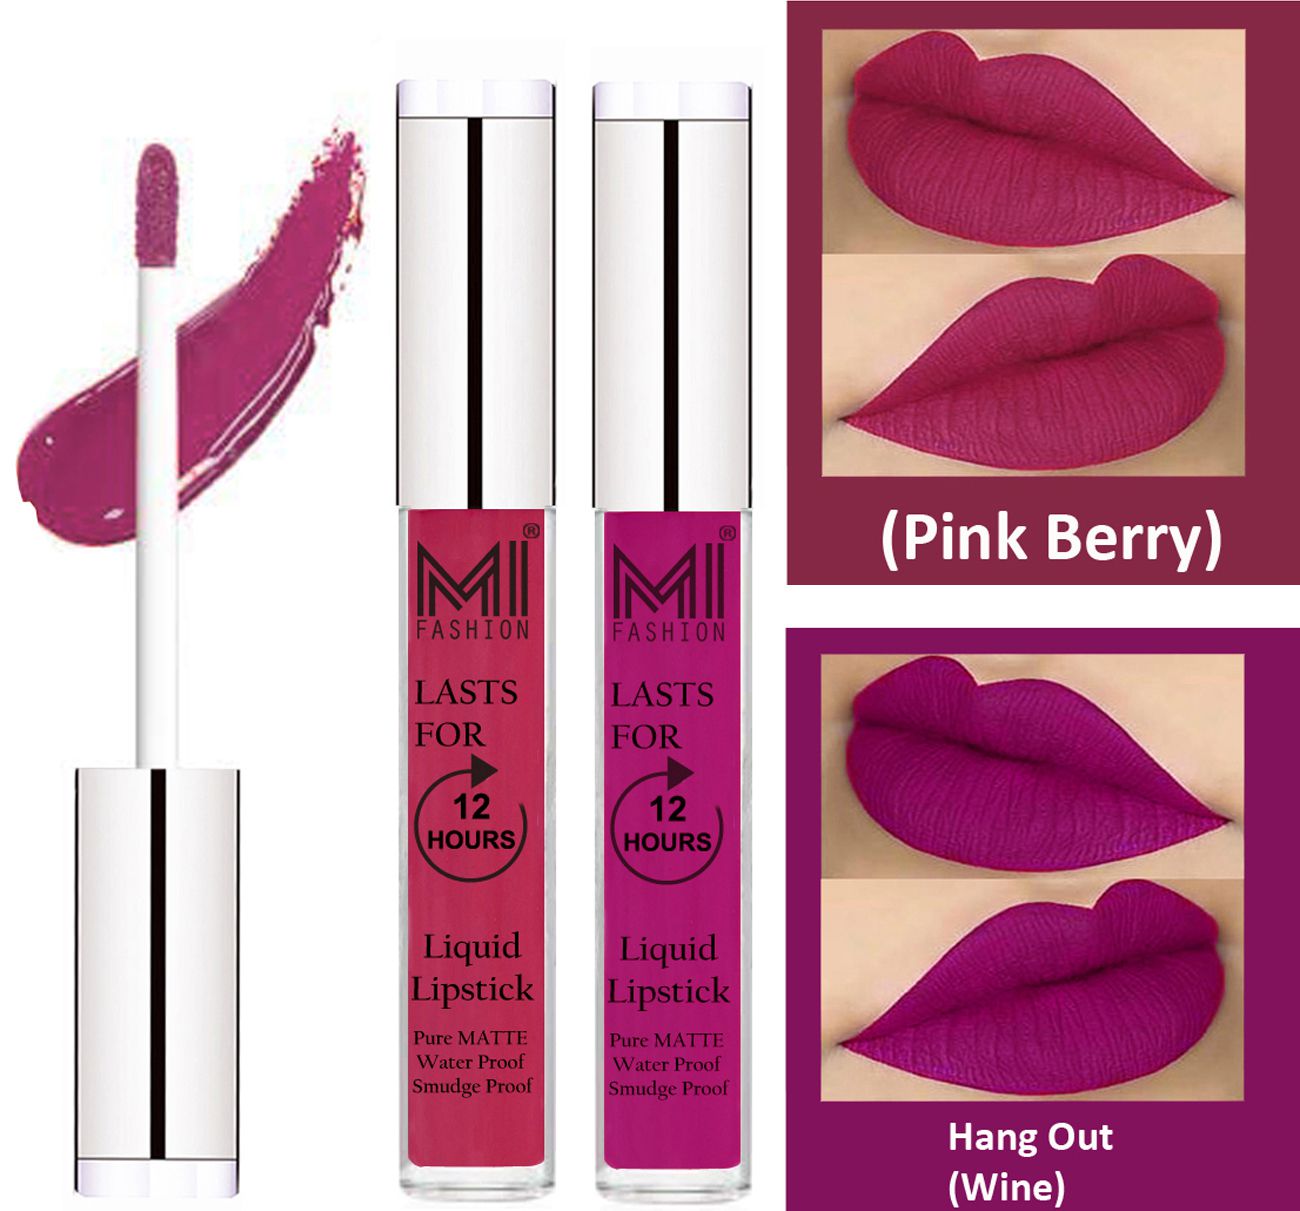 MI FASHION Liquid Lipstick Pink Berry Berry,Wine Pack of 2